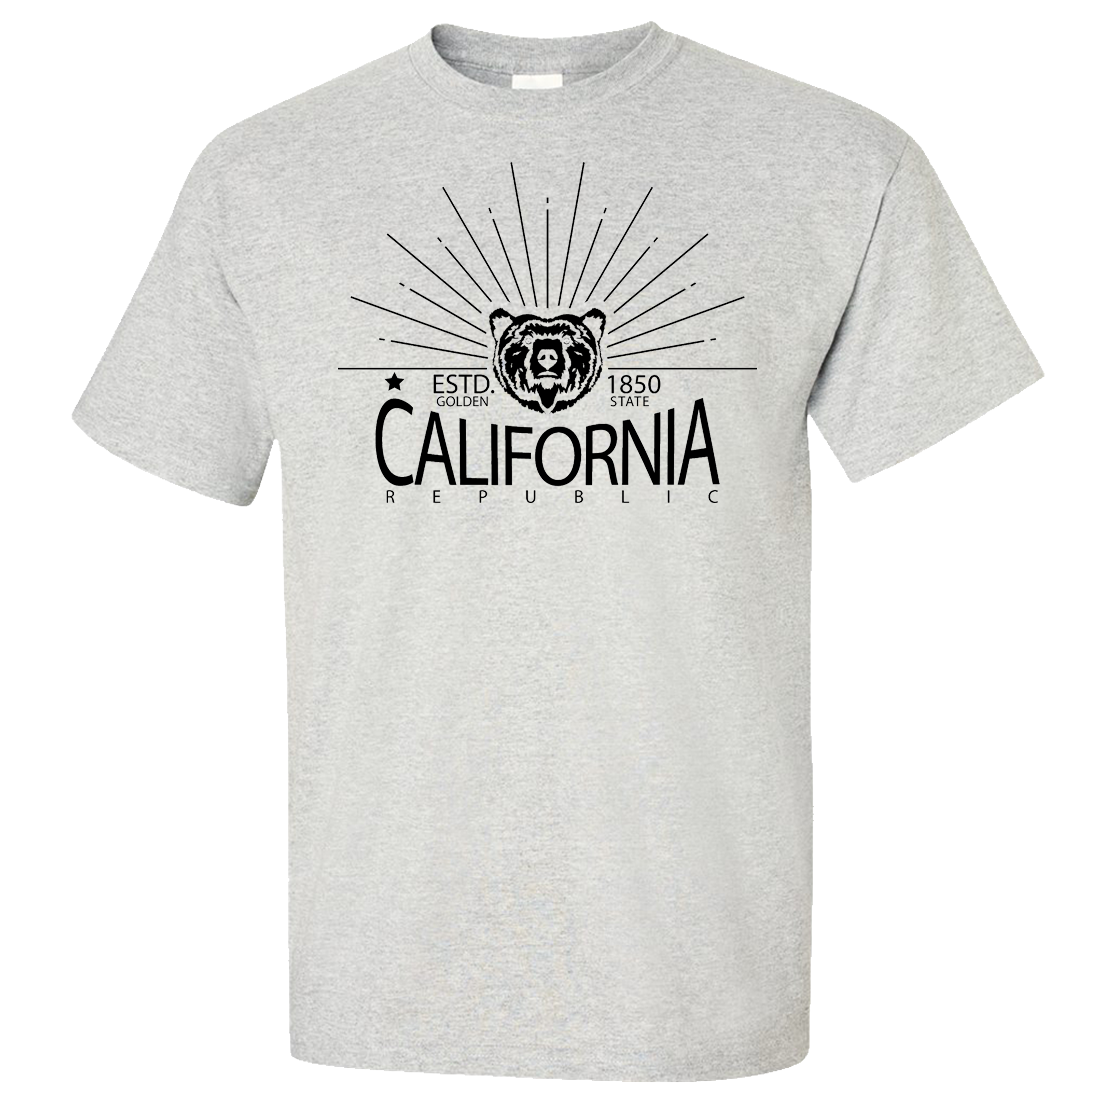 California Golden State 1850 Asst Colors T-shirt/tee - California Republic  Clothes